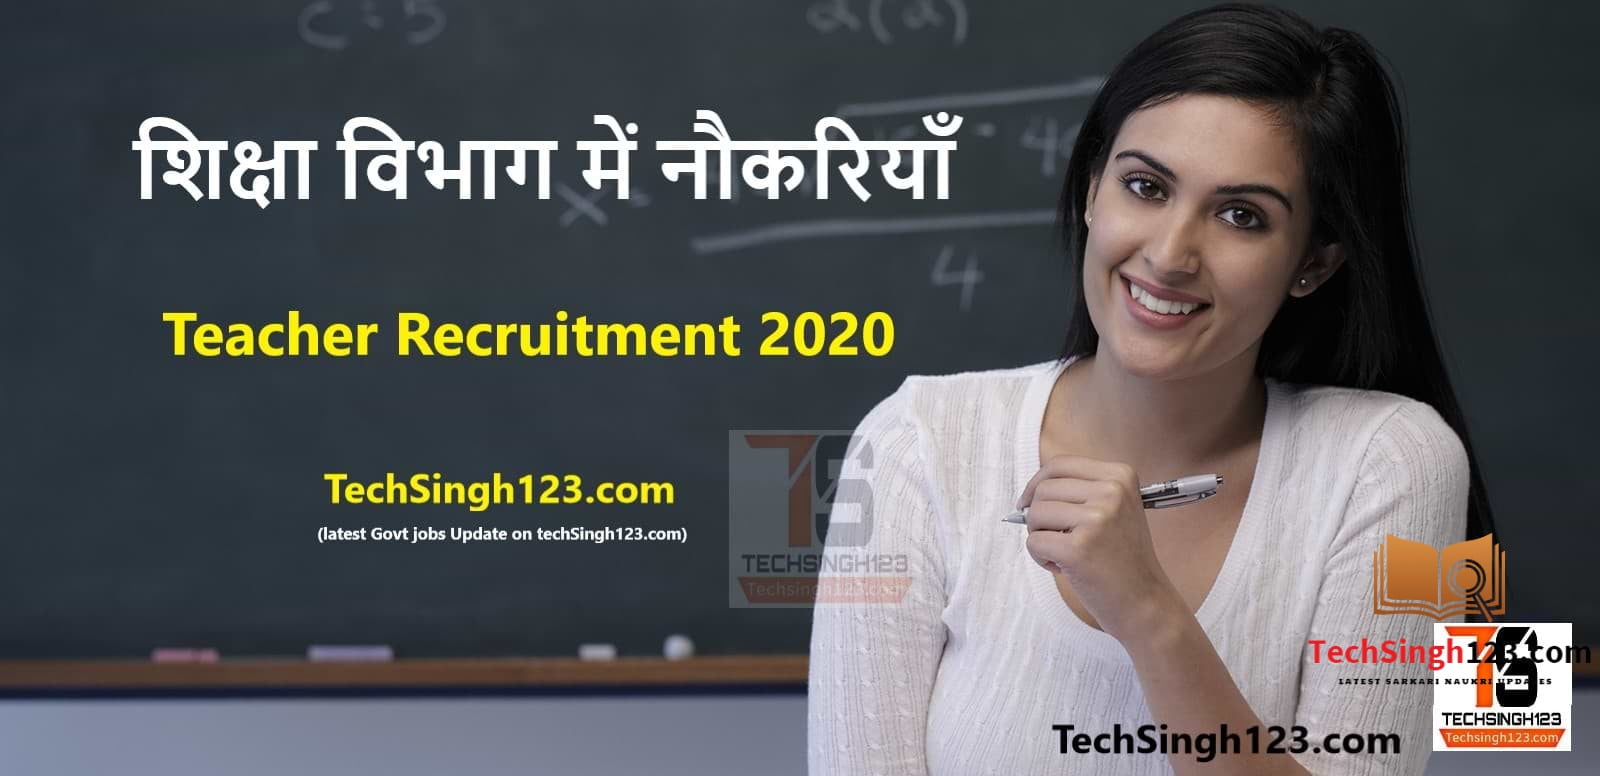 KAU Recruitment 2020-2021 Kerala Agricultural University Recruitment 2020